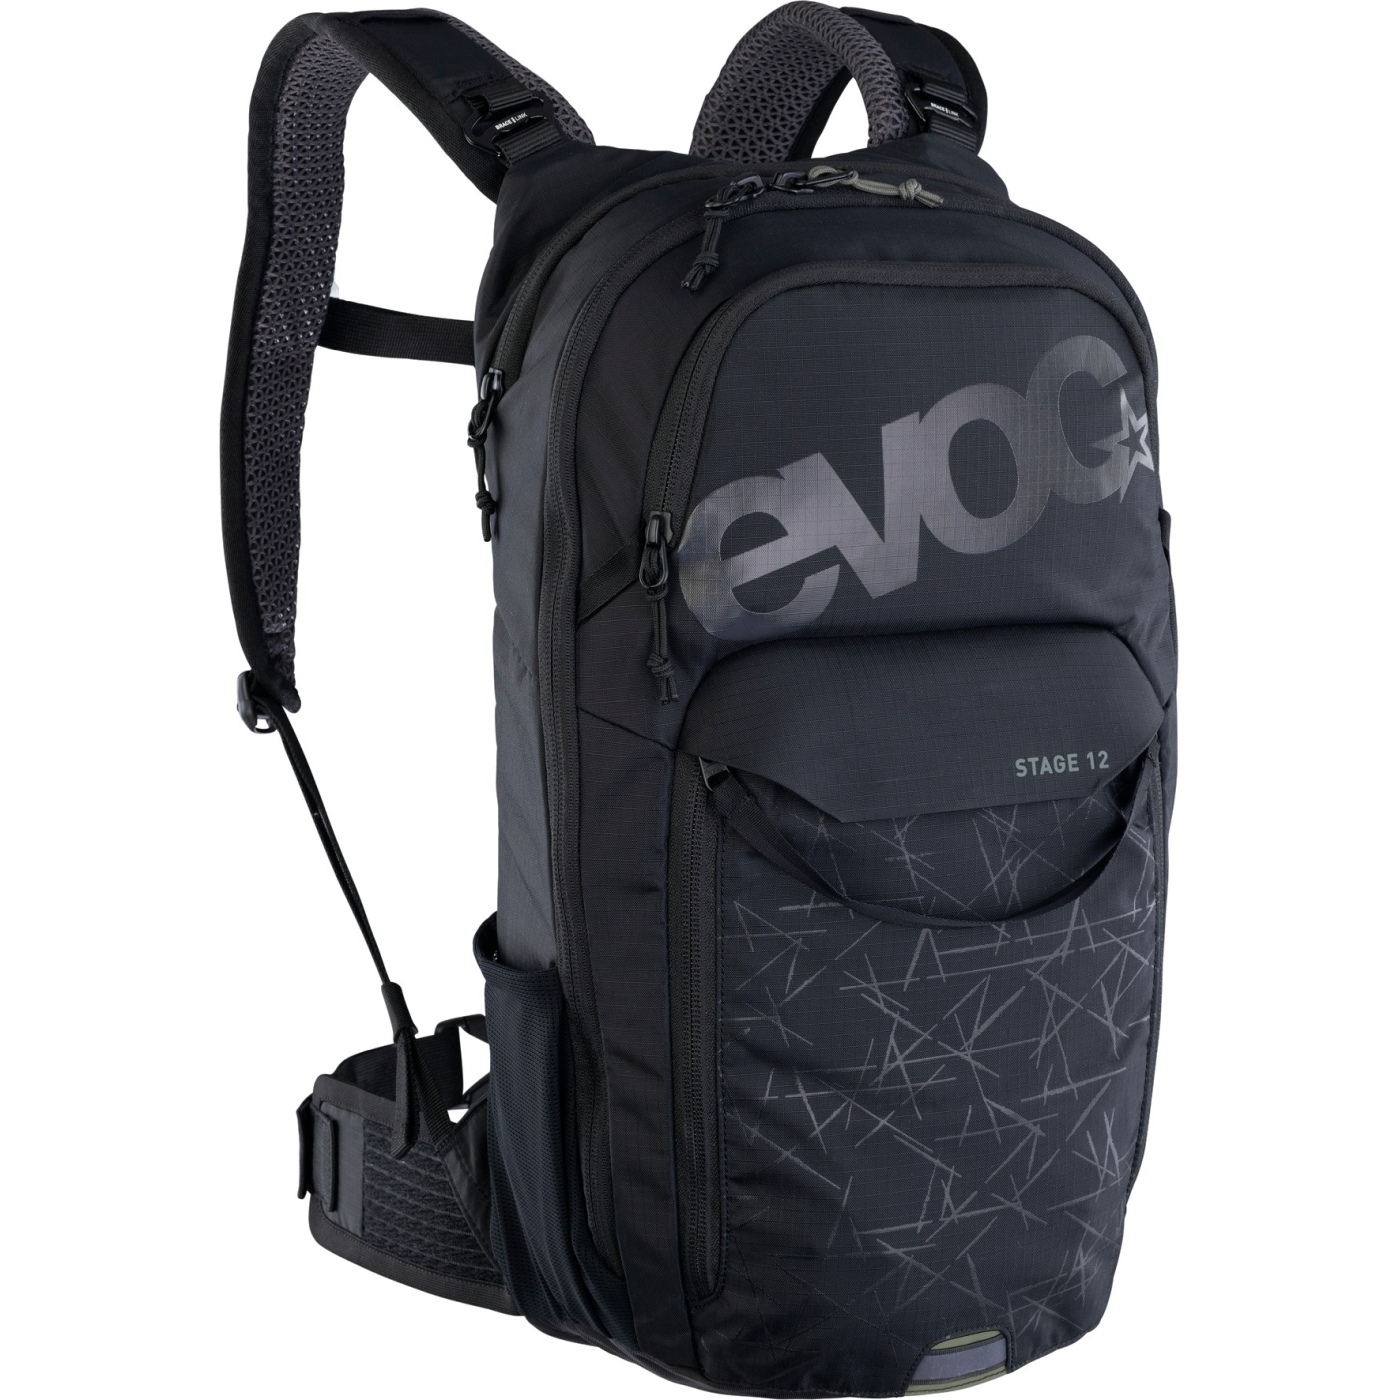 Picture of EVOC Stage Backpack - 12 L - Black